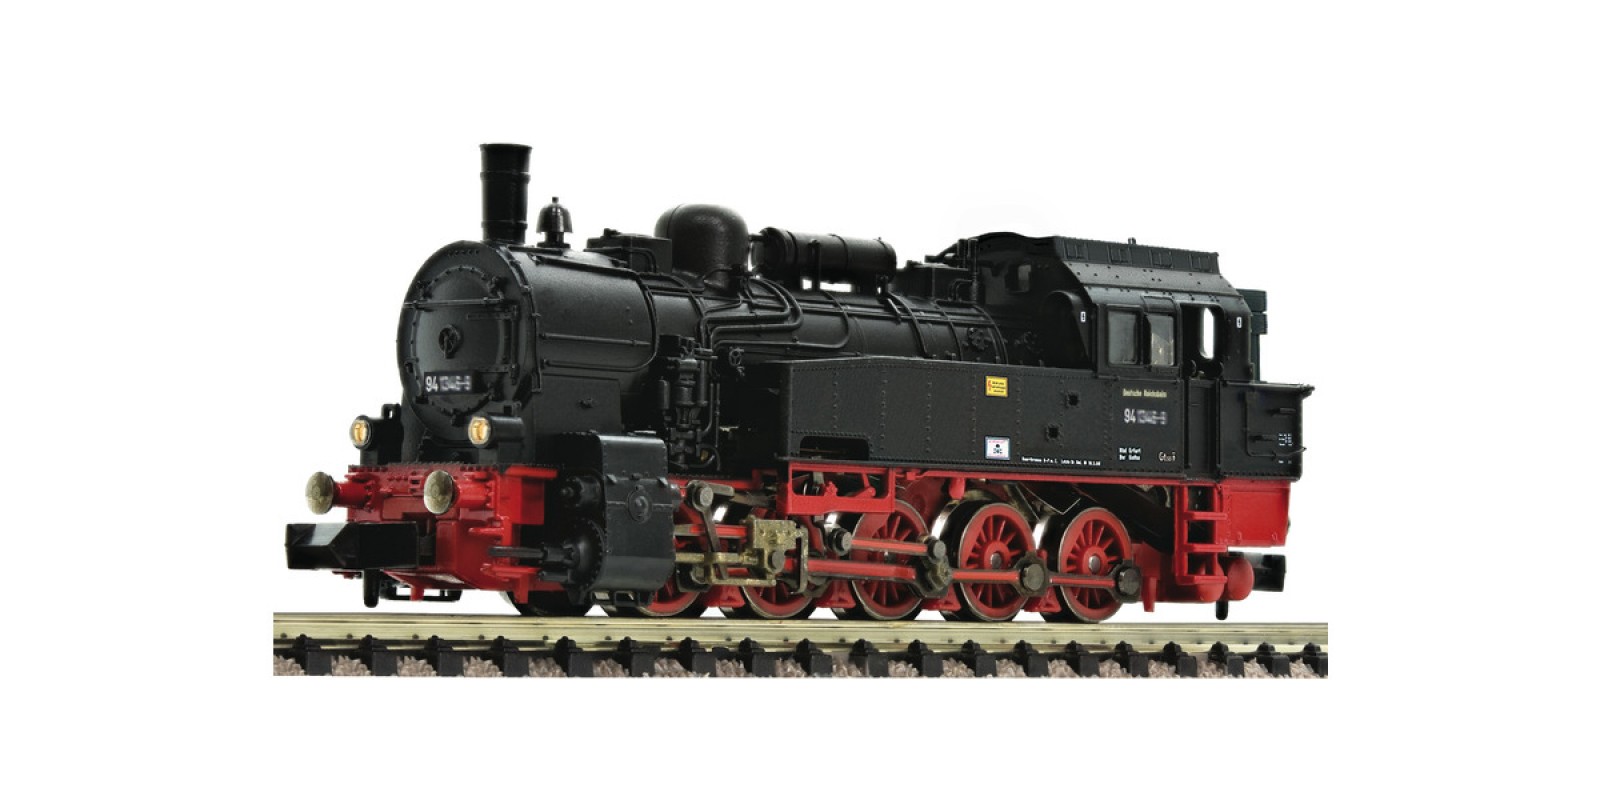 FL709501 Steam locomotive class 94.5-17, DR